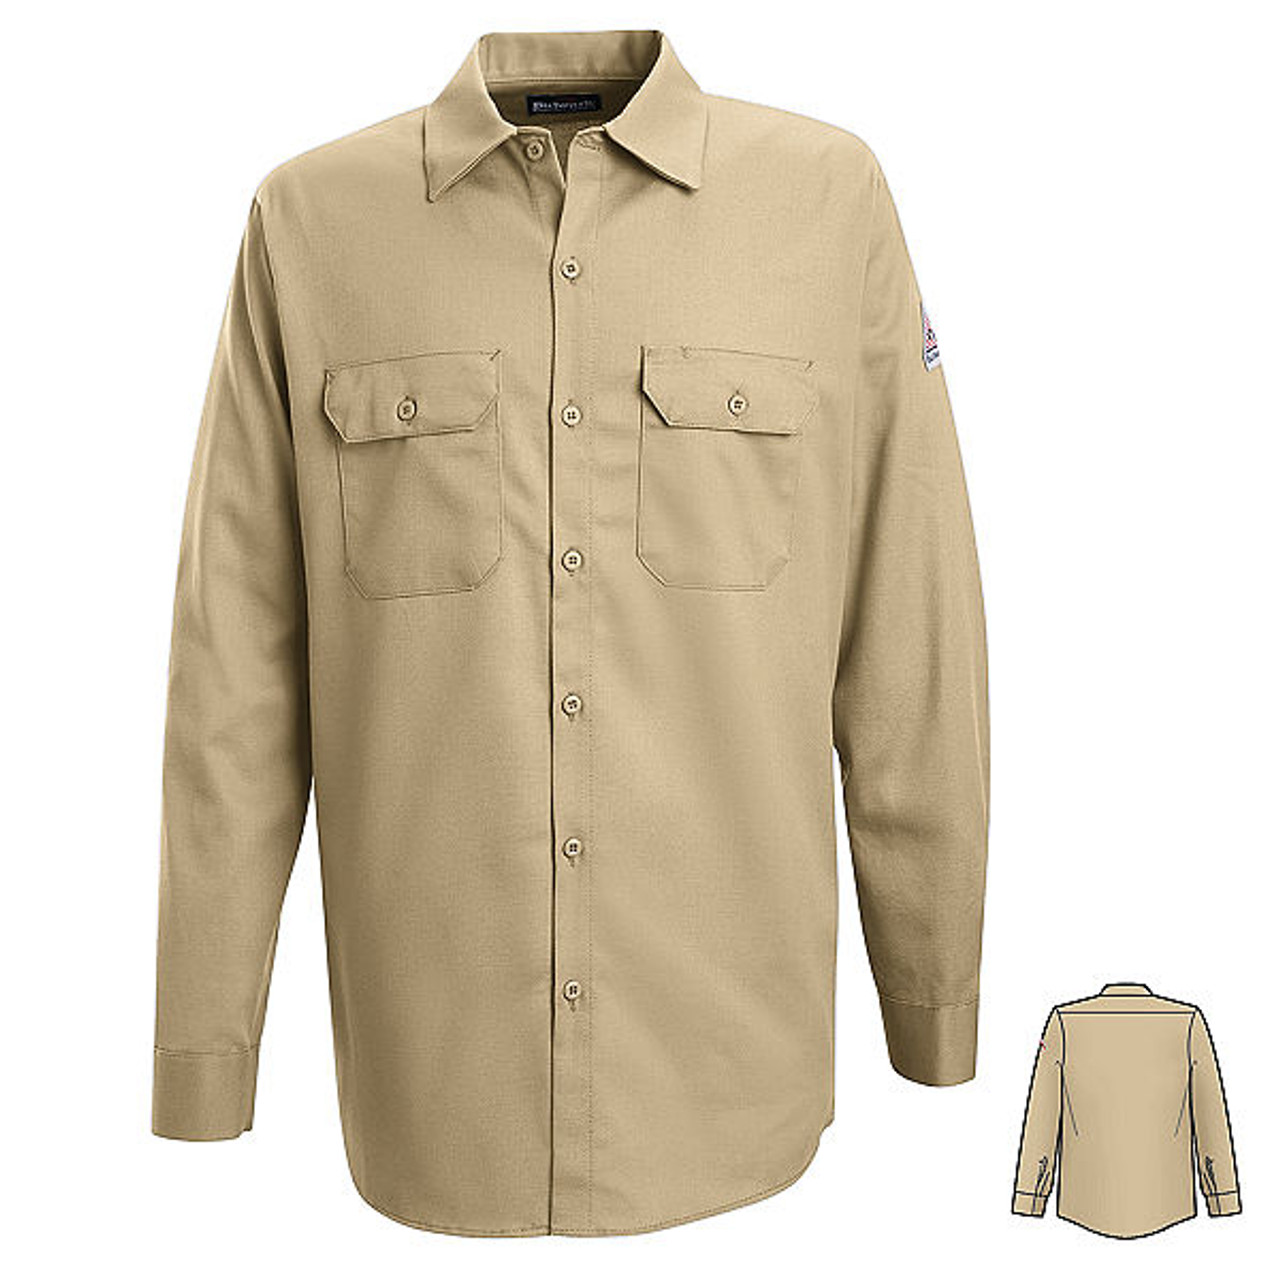 Blankactivewear t-shirt performance active wear vêtement blank –  www.. ST842 Unisex short, dry fit